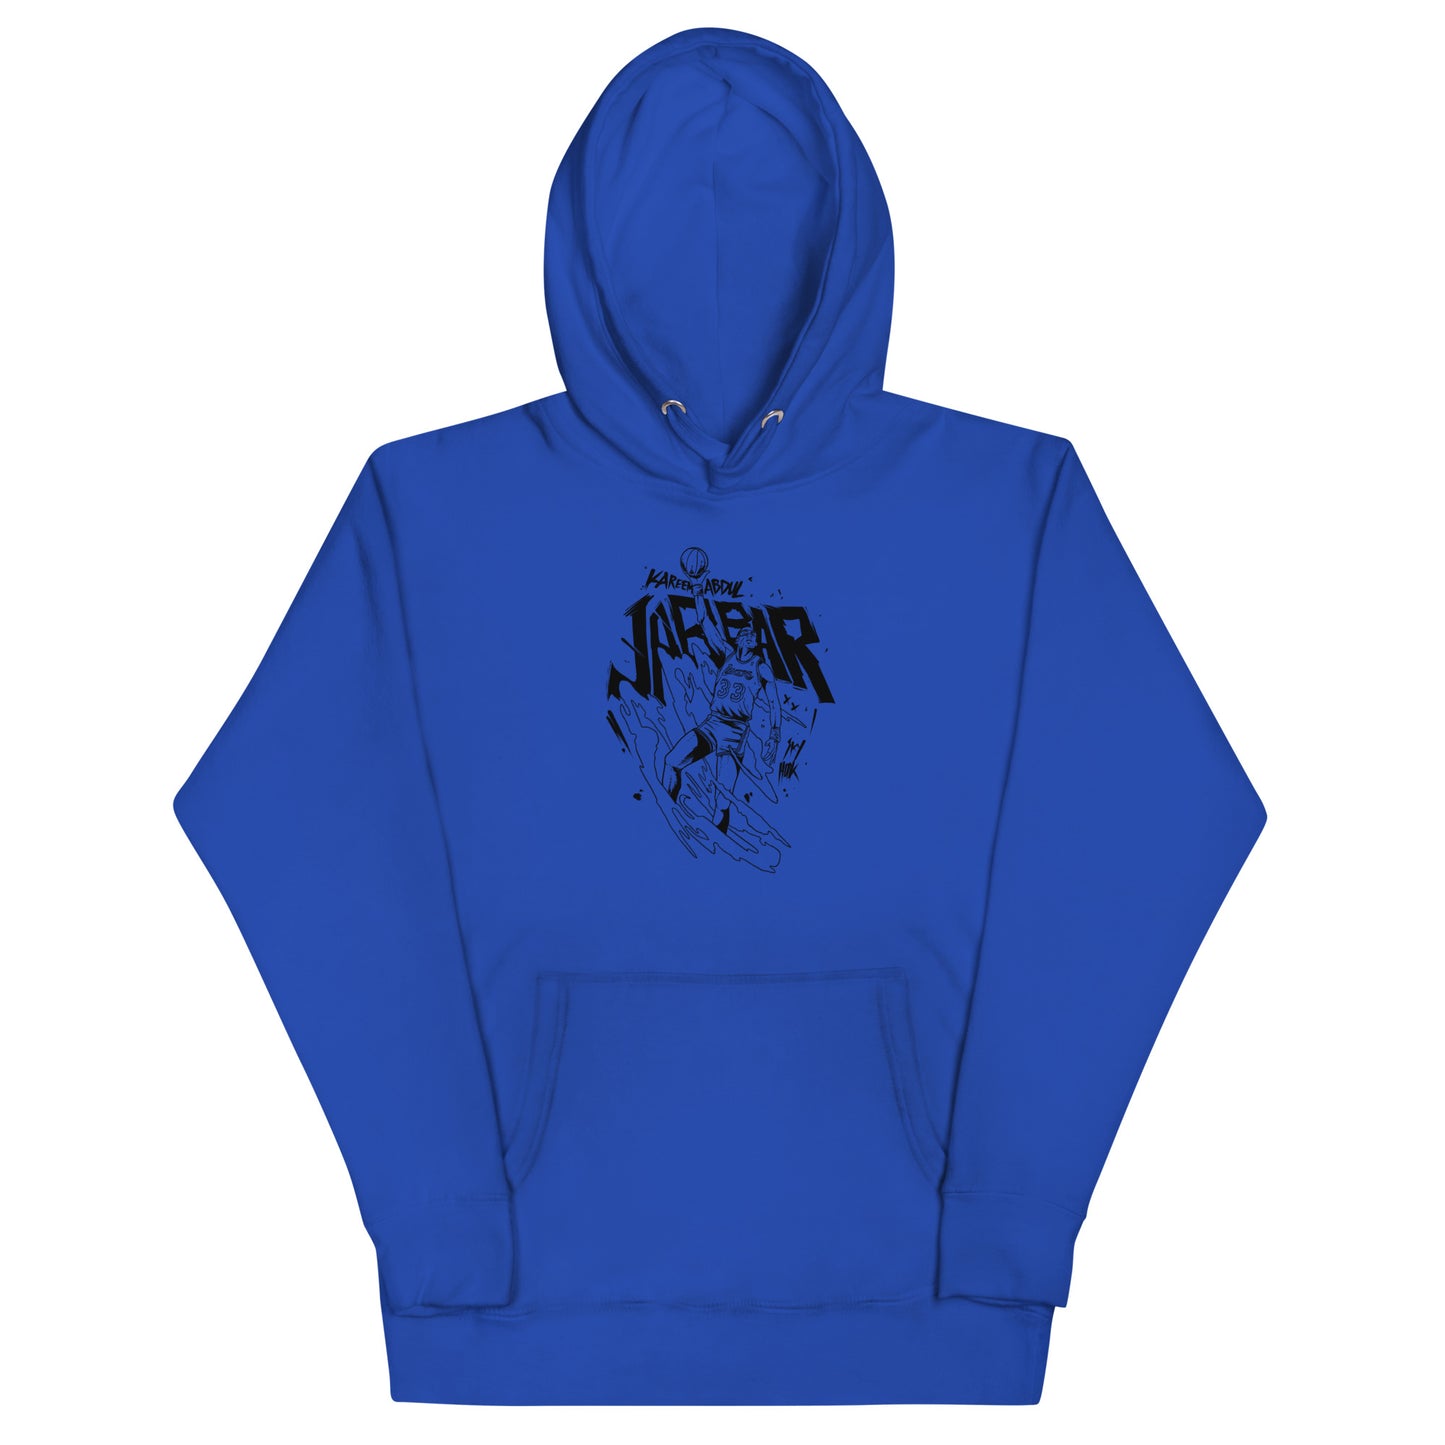 Kareem Abdul-Jabbar - "Sky Hook" hoodie